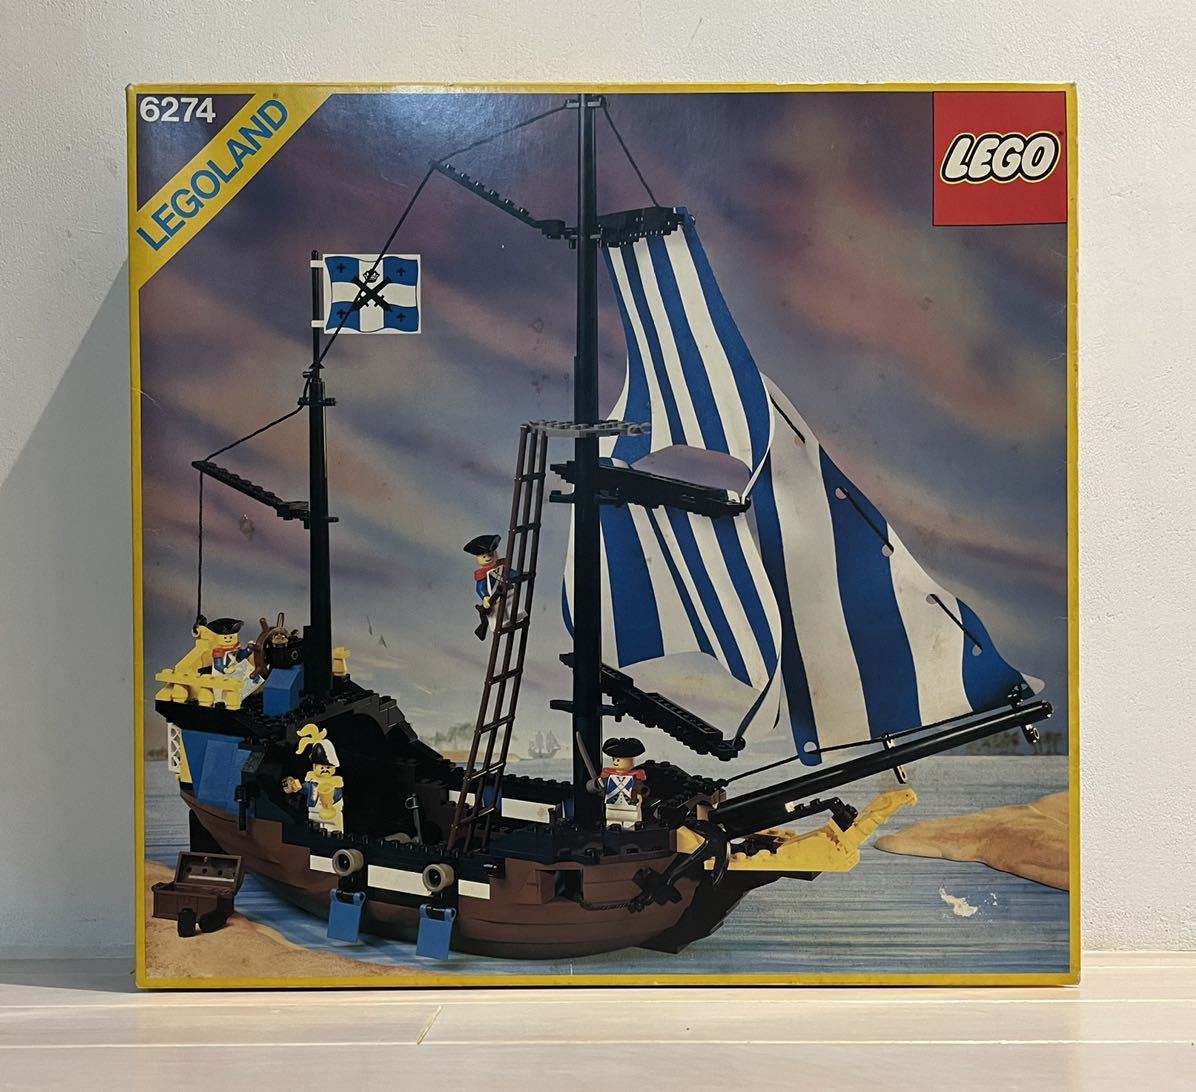 LEGO 6274 シーフォーク号 レゴ Caribbean Clipper 新品 未開封 南海の